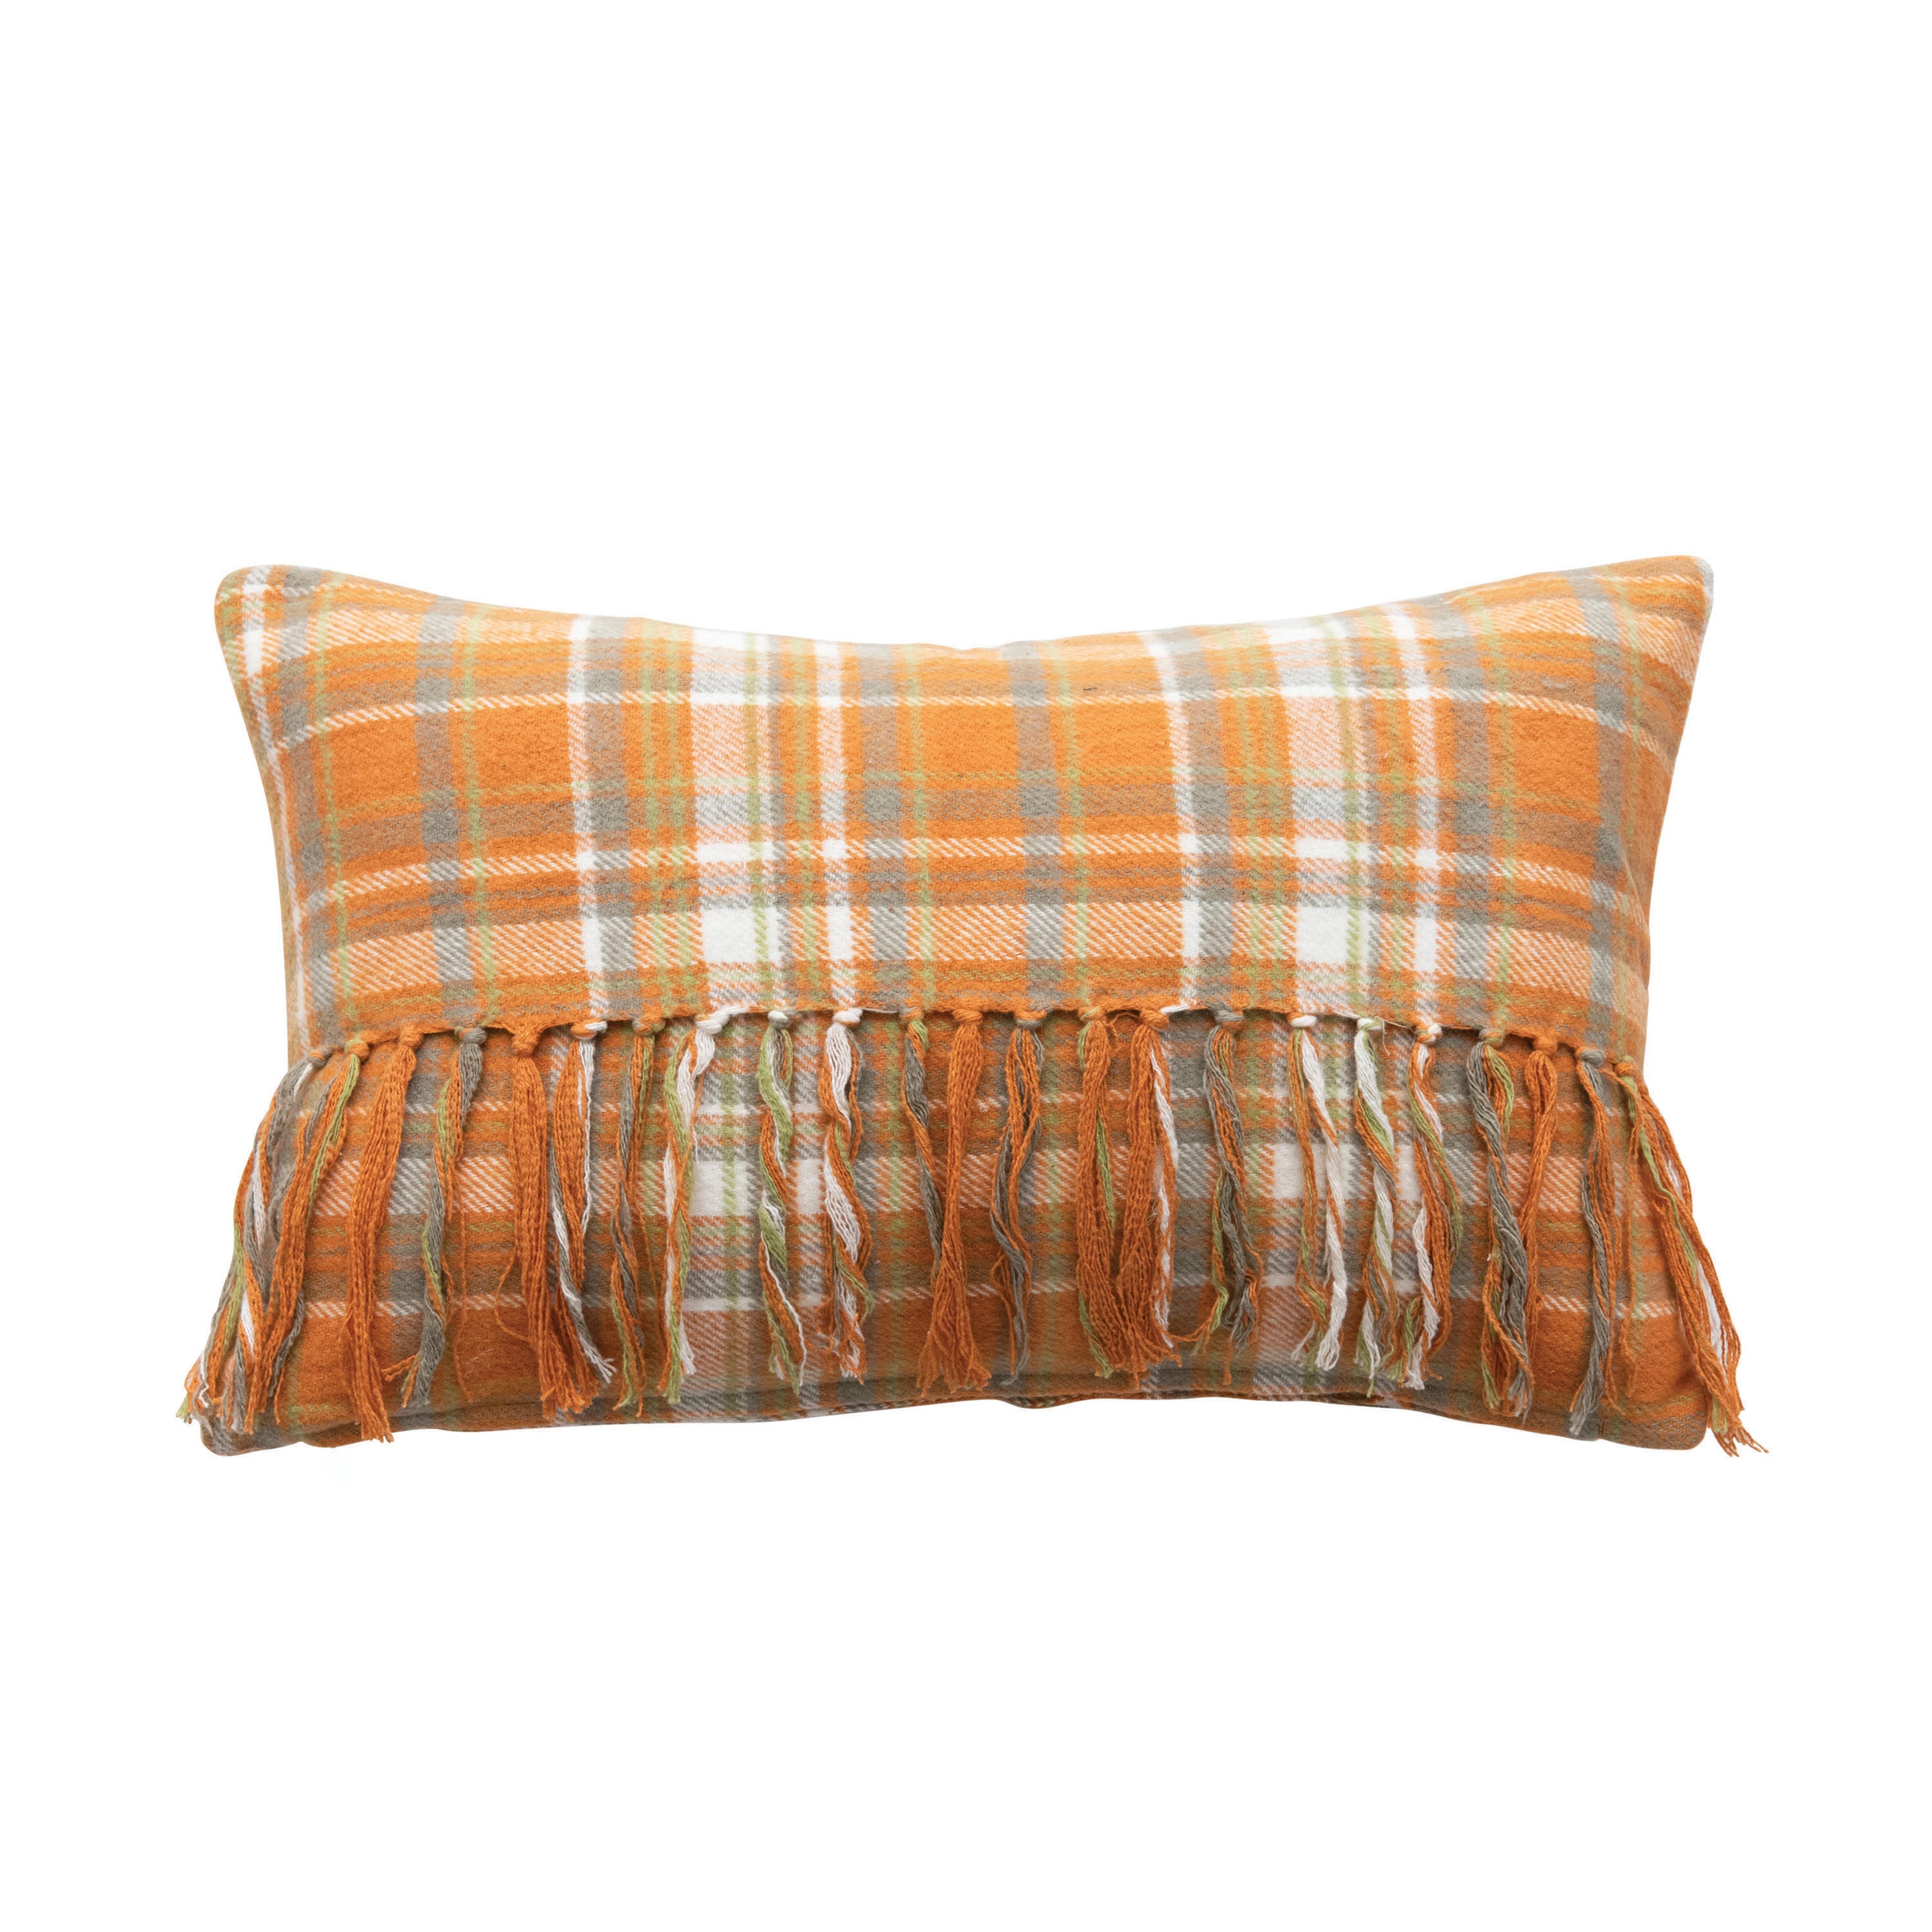 20" x 14" Cotton Flannel Lumbar Pillow with Fringe, Multi Color Plaid